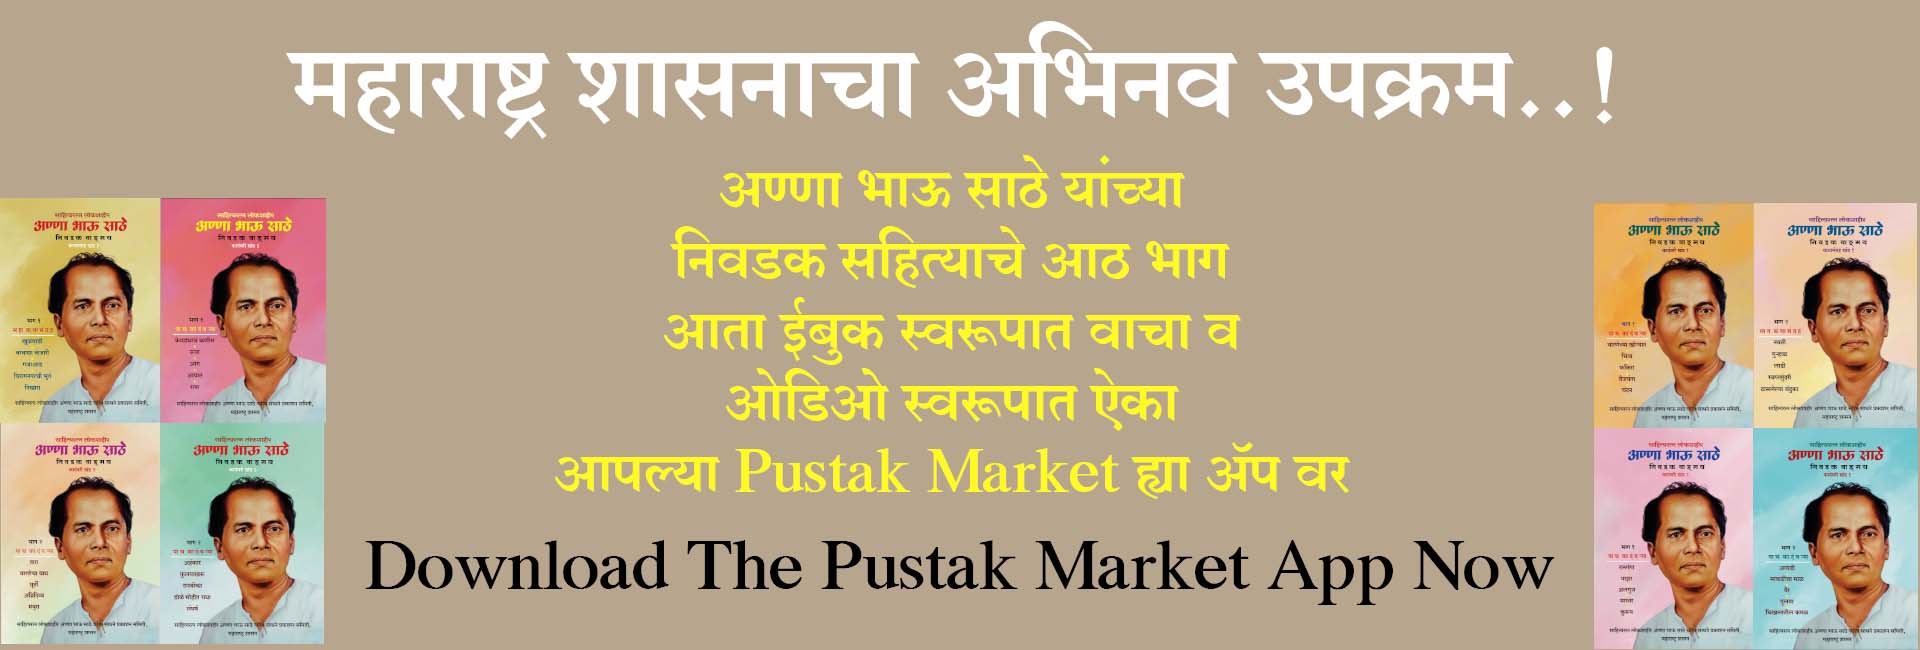 pustak market 5